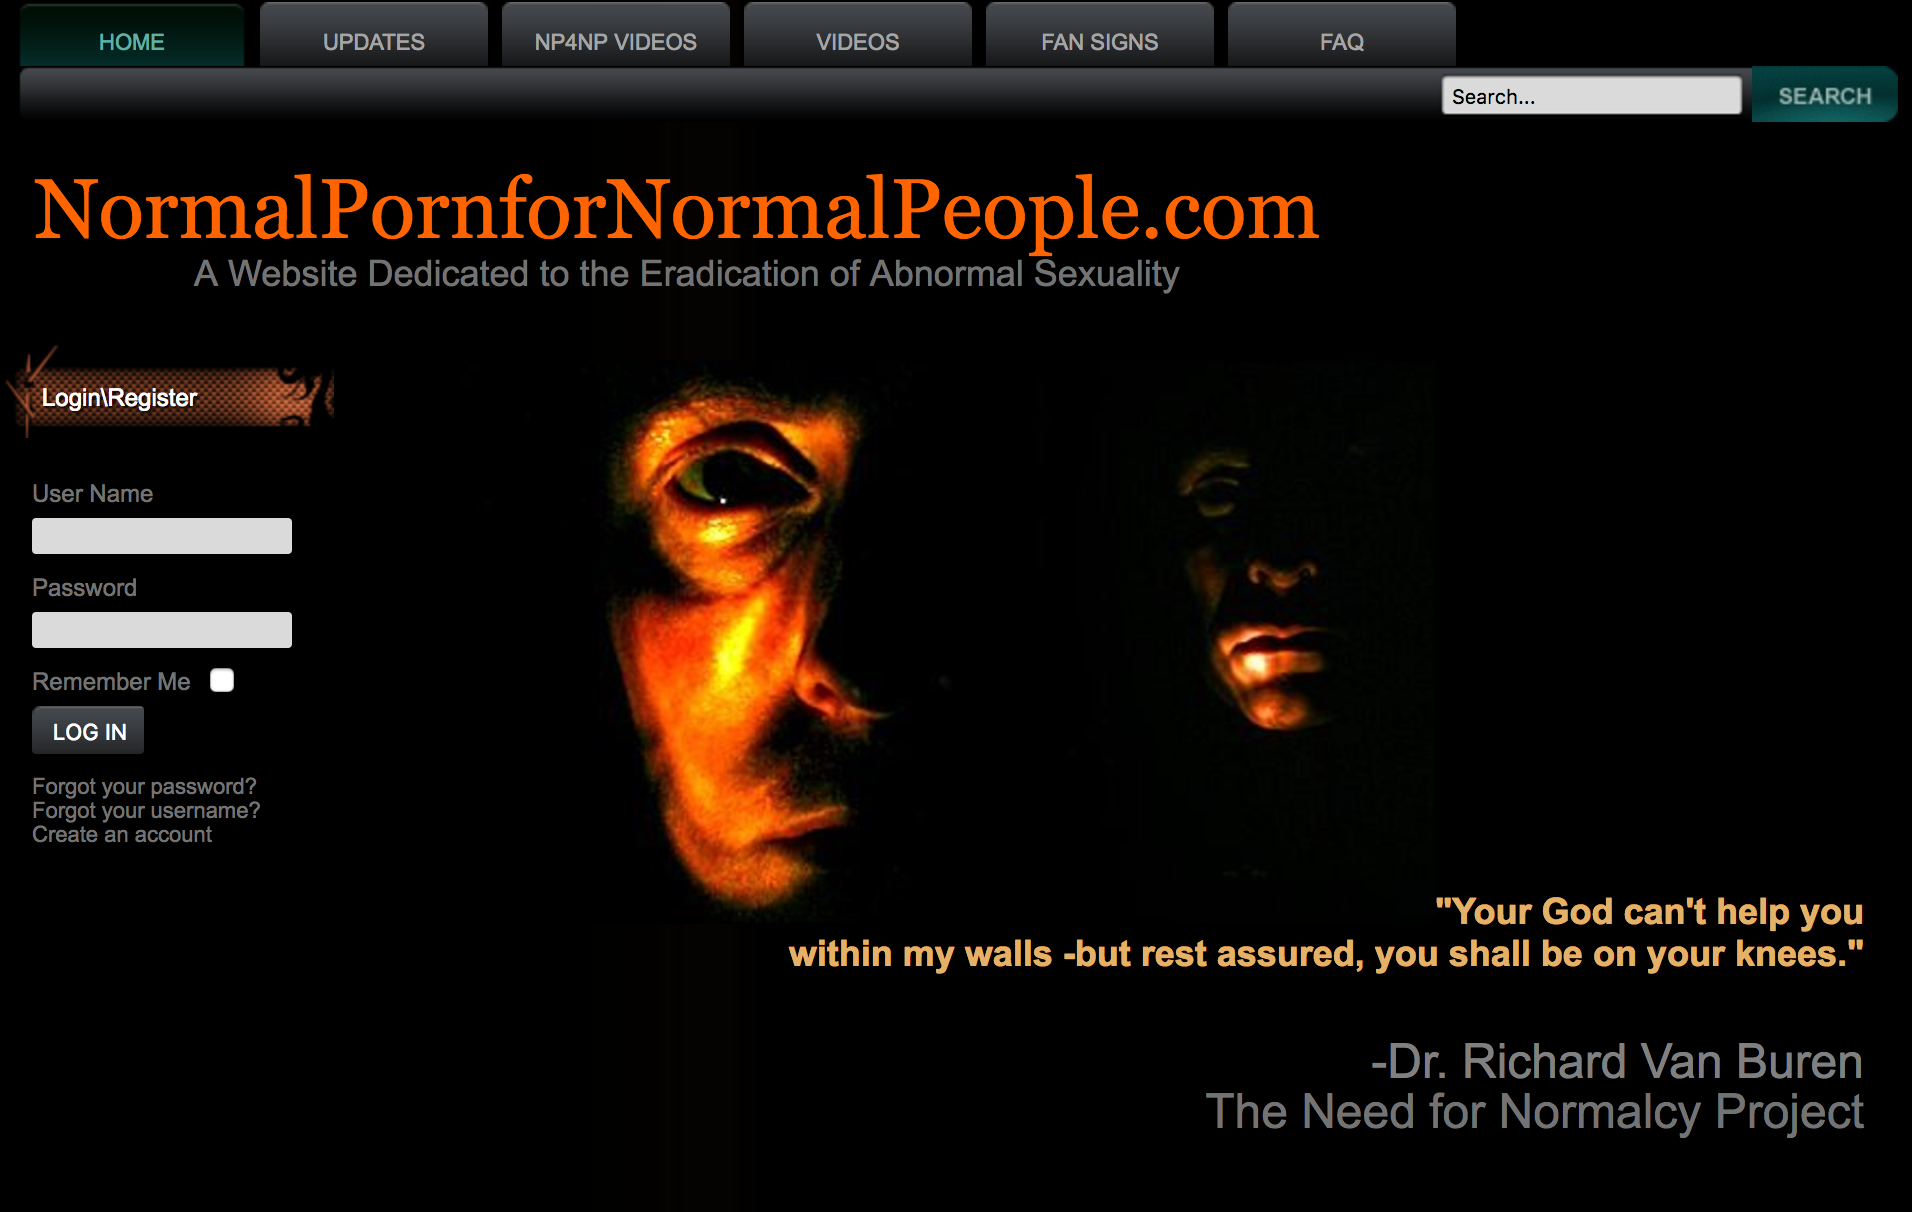 NormalPornForNormalPeople.com